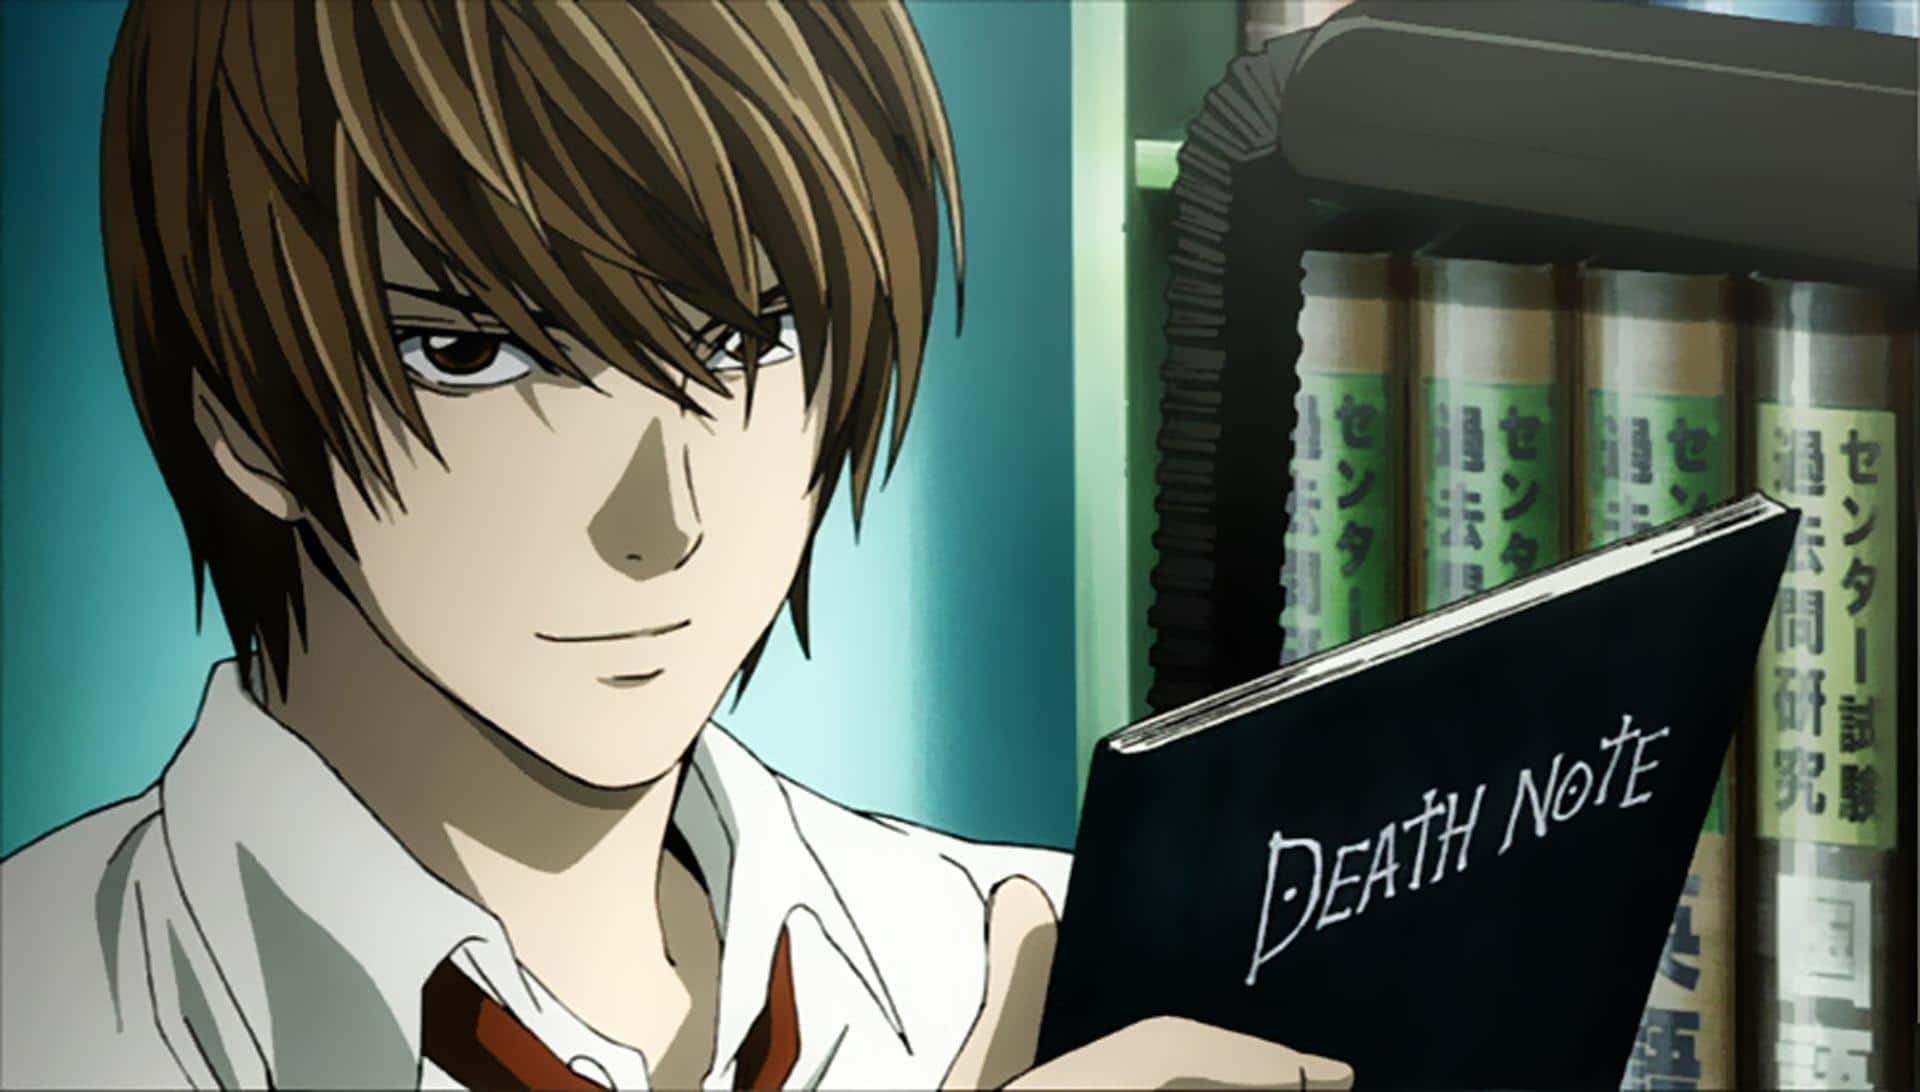 Netflix confirma que filme de Death Note terá sequência - NerdBunker